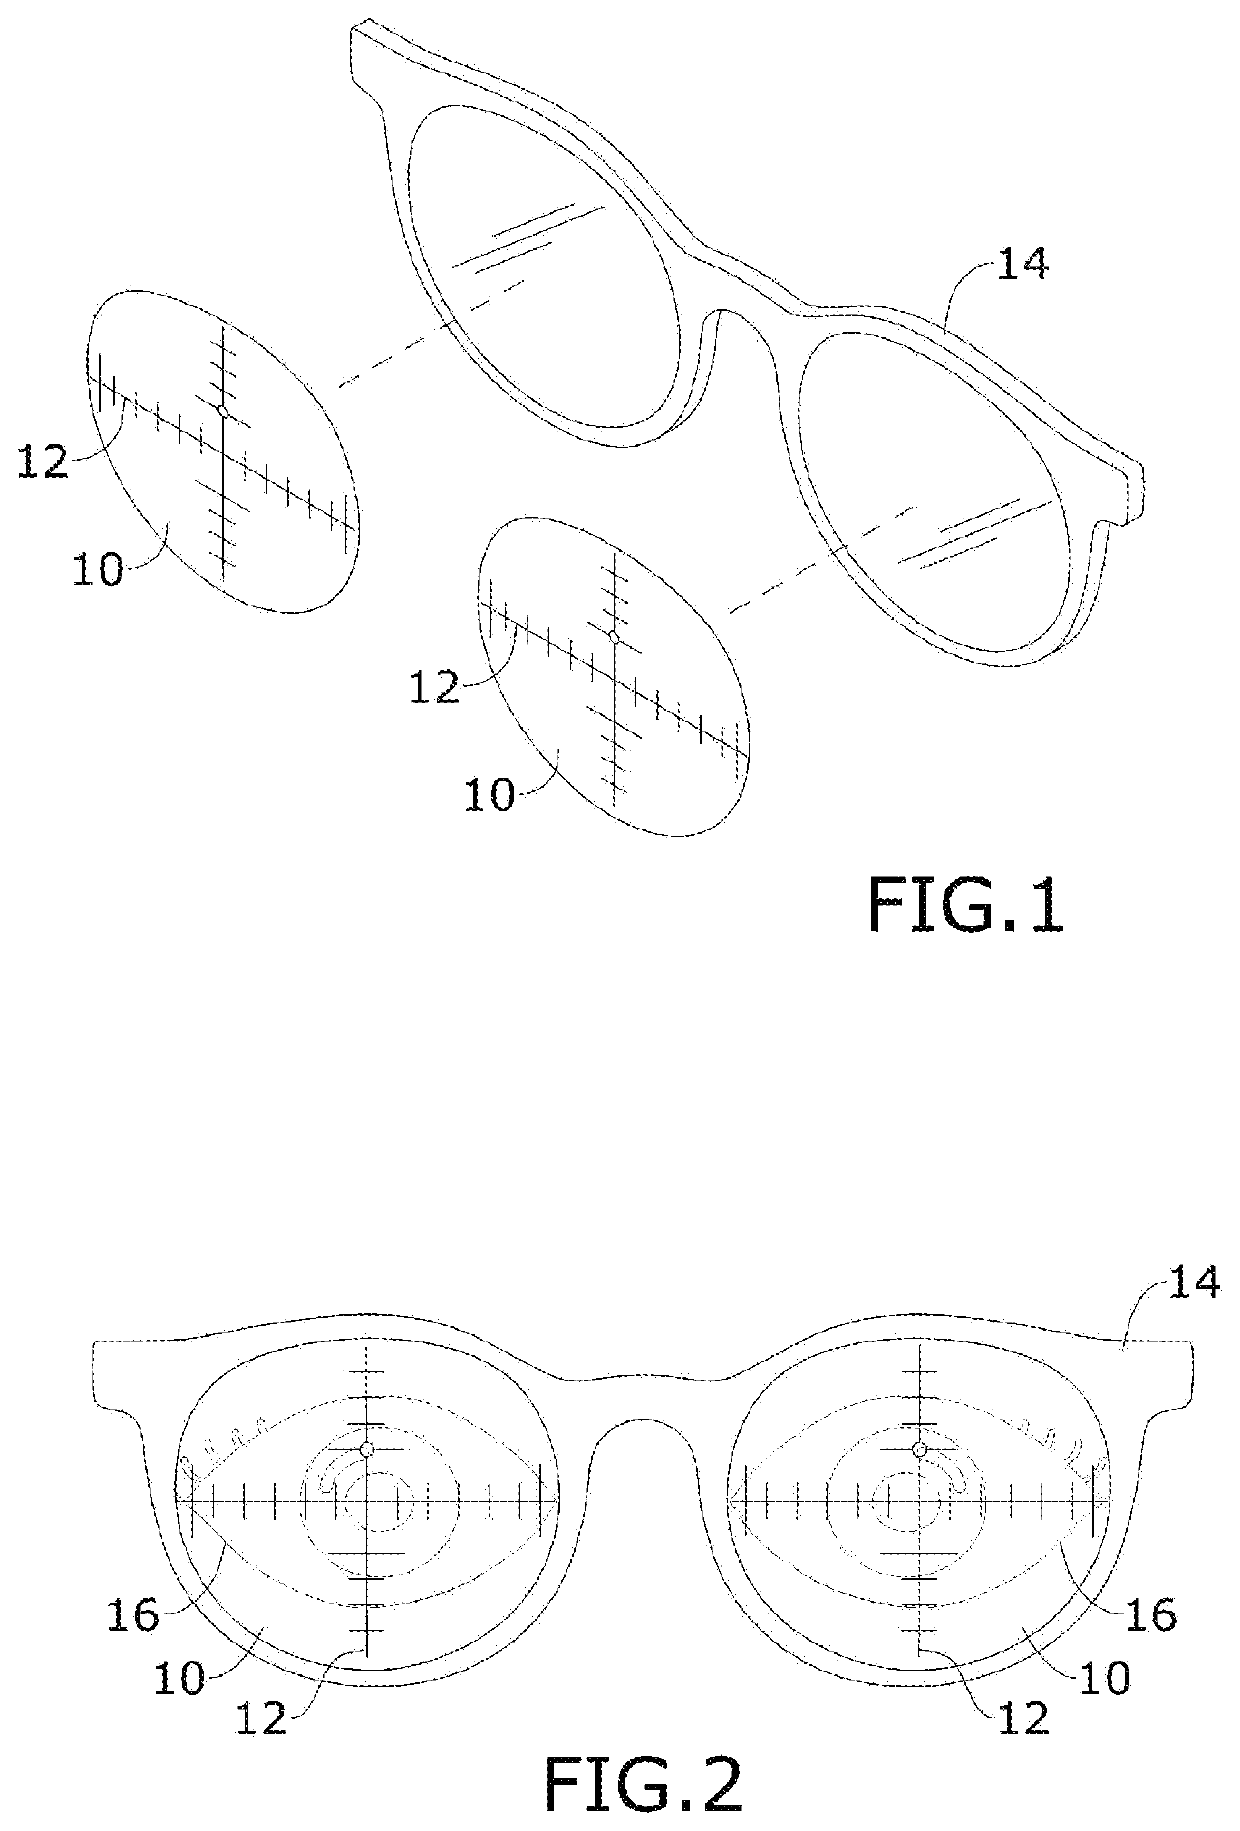 Method for adjusting prescription eyeglasses at a remote location based on measured data of a user's of the eyeglasses